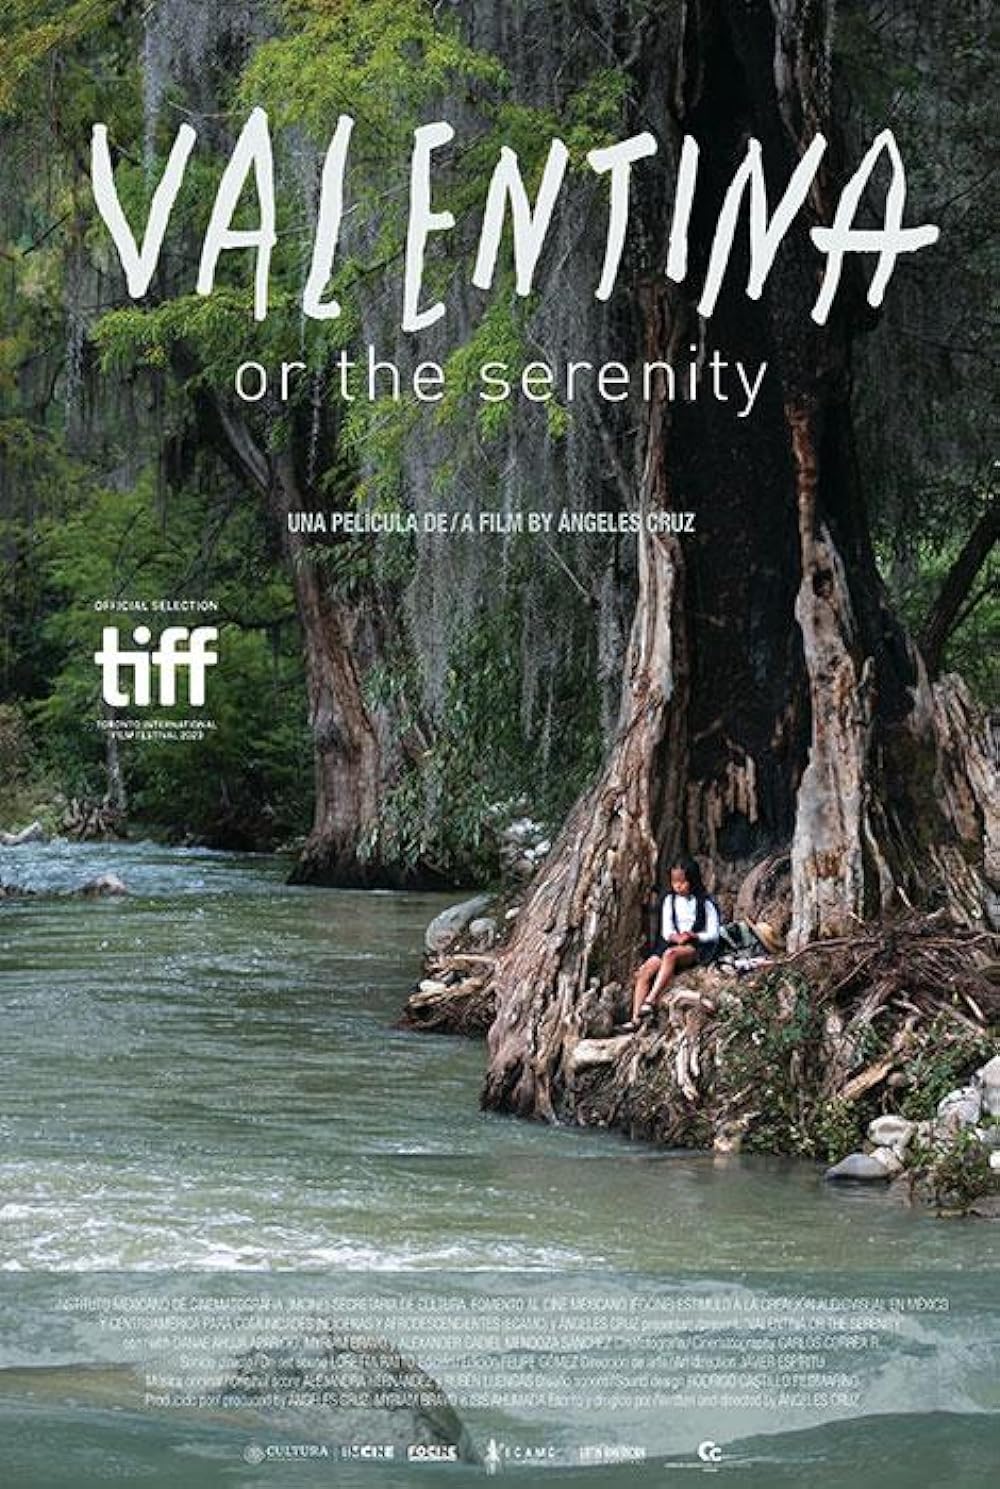 Valentina or the Serenity